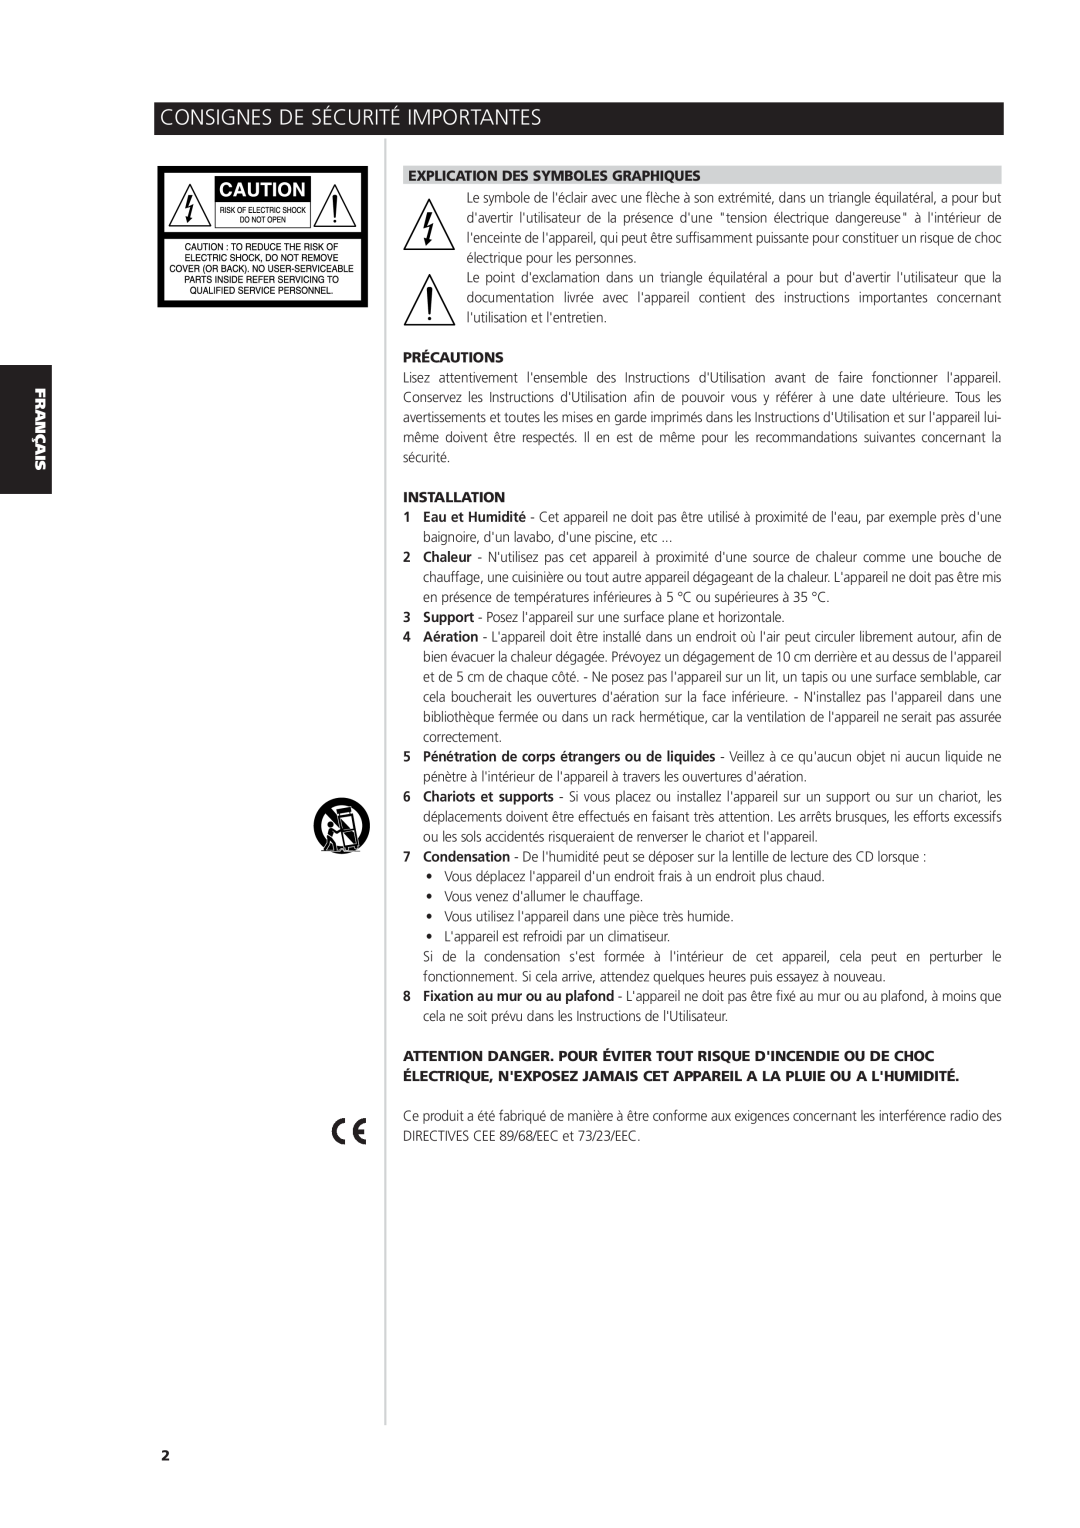 NAD S170iAV owner manual Consignes De Sécurité Importantes, Explication Des Symboles Graphiques, Précautions, Installation 